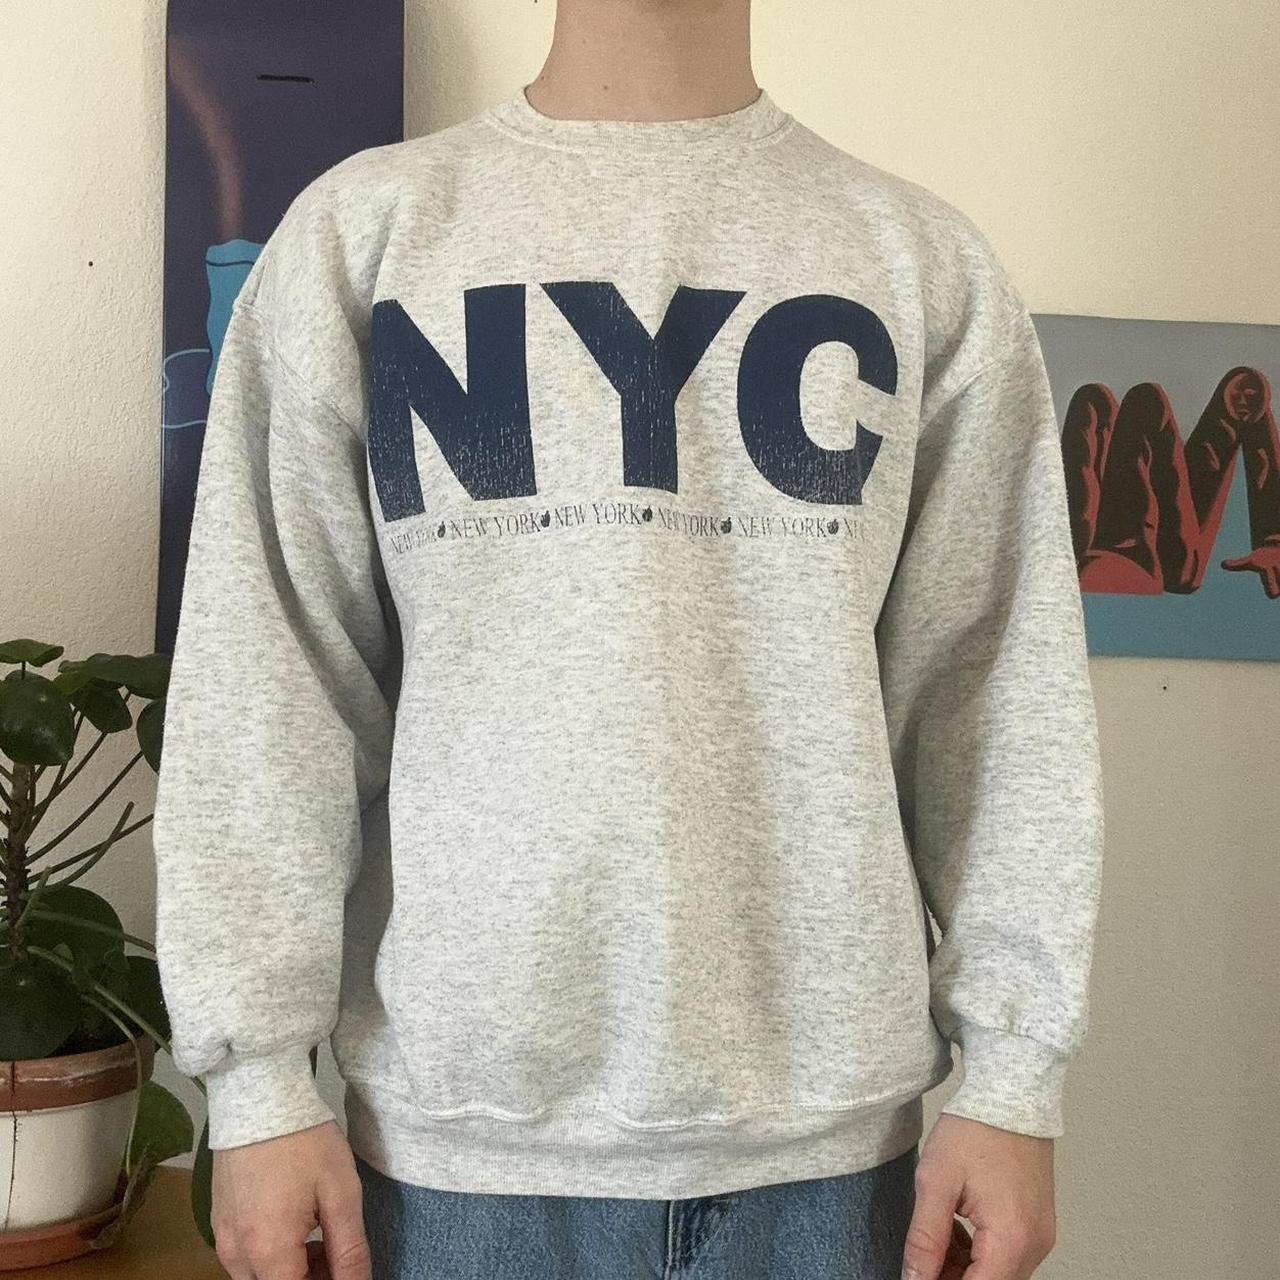 Vintage 90s New York City Crewneck Sweatshirt Made... - Depop